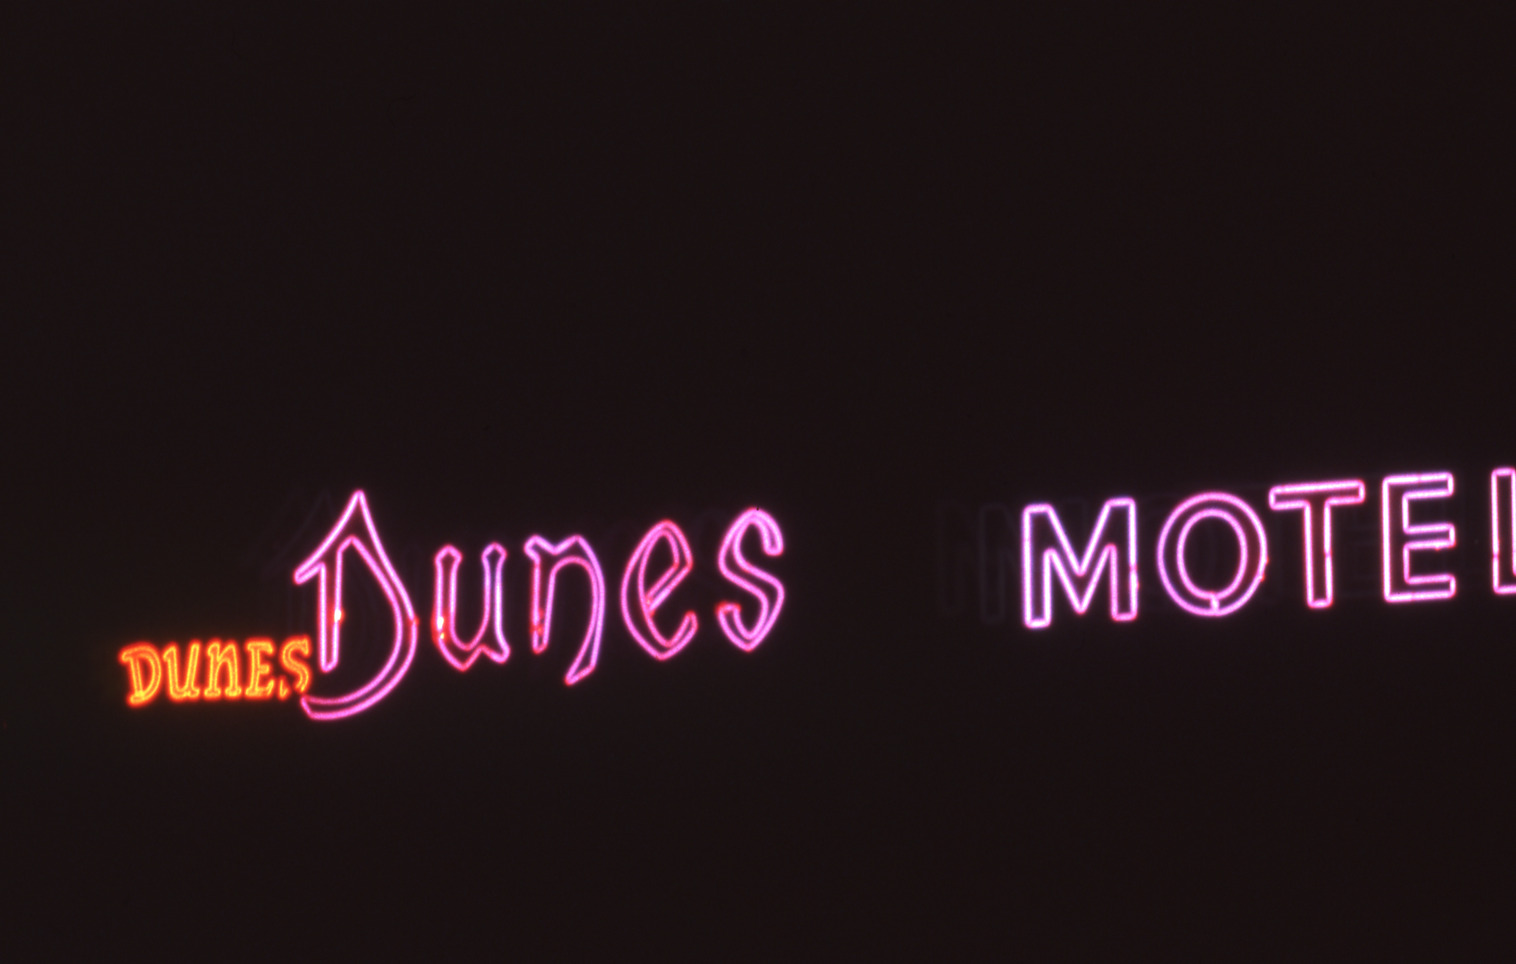 Dunes Motel sign, Reno, Nevada: photographic print